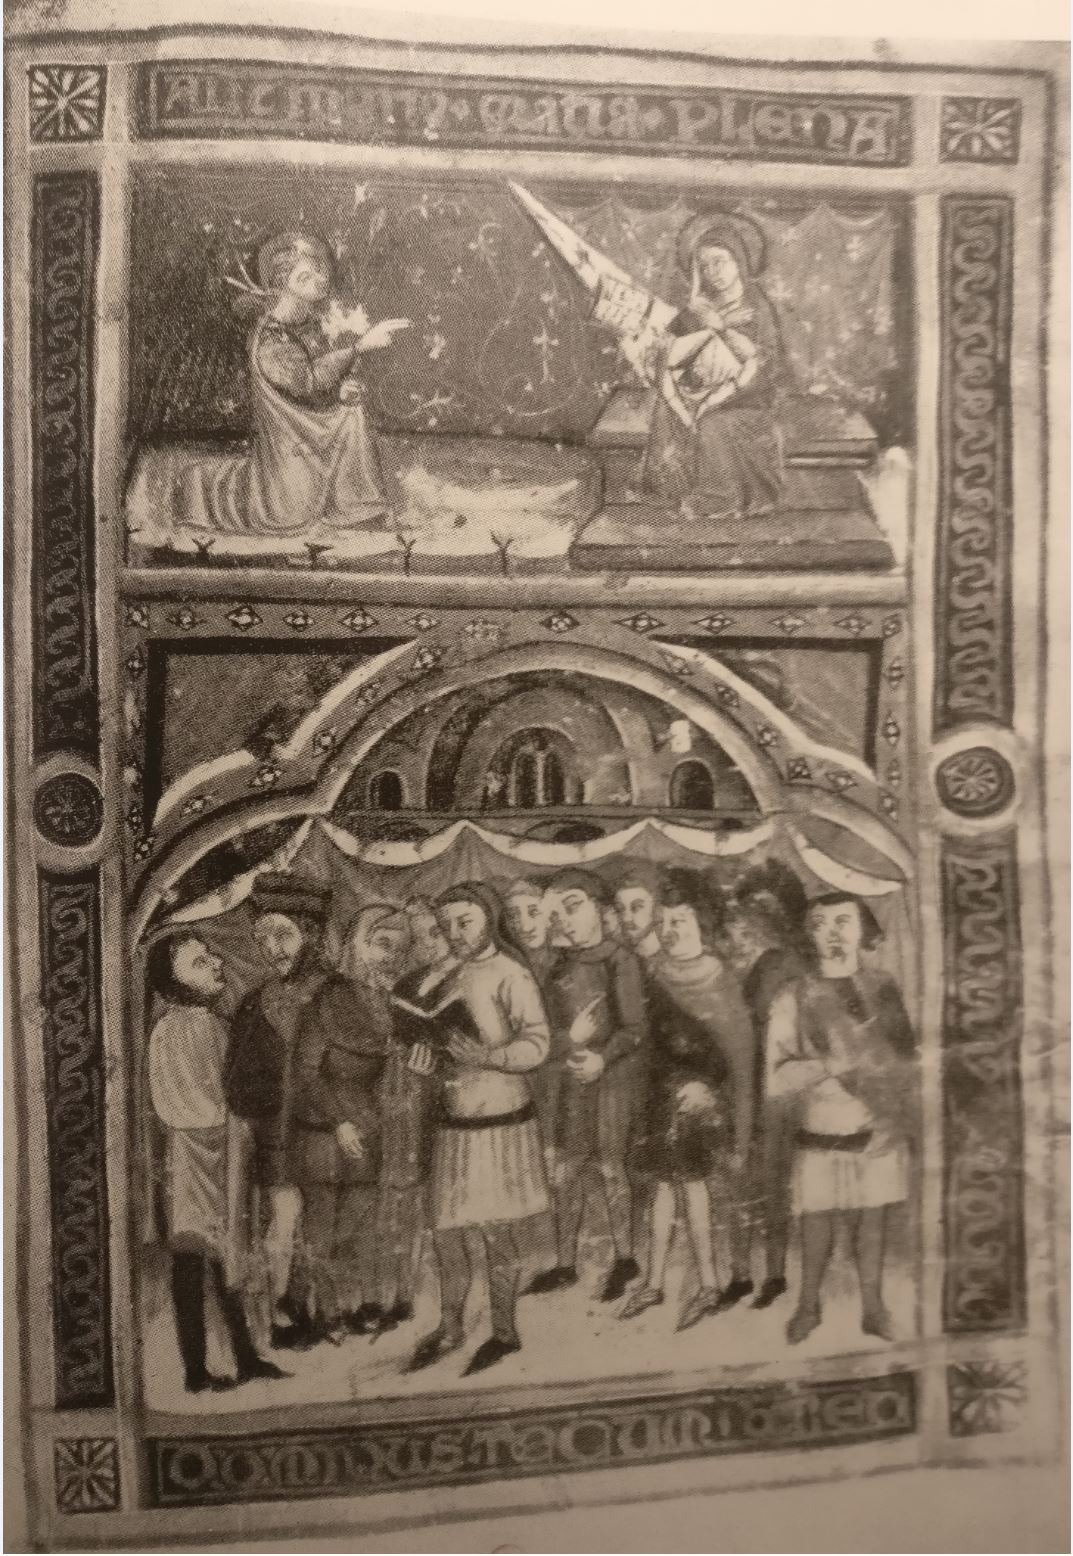 1382 Mastro Girardo Statuts des mastellari (tonneliers) Bibliotheque Ferrare